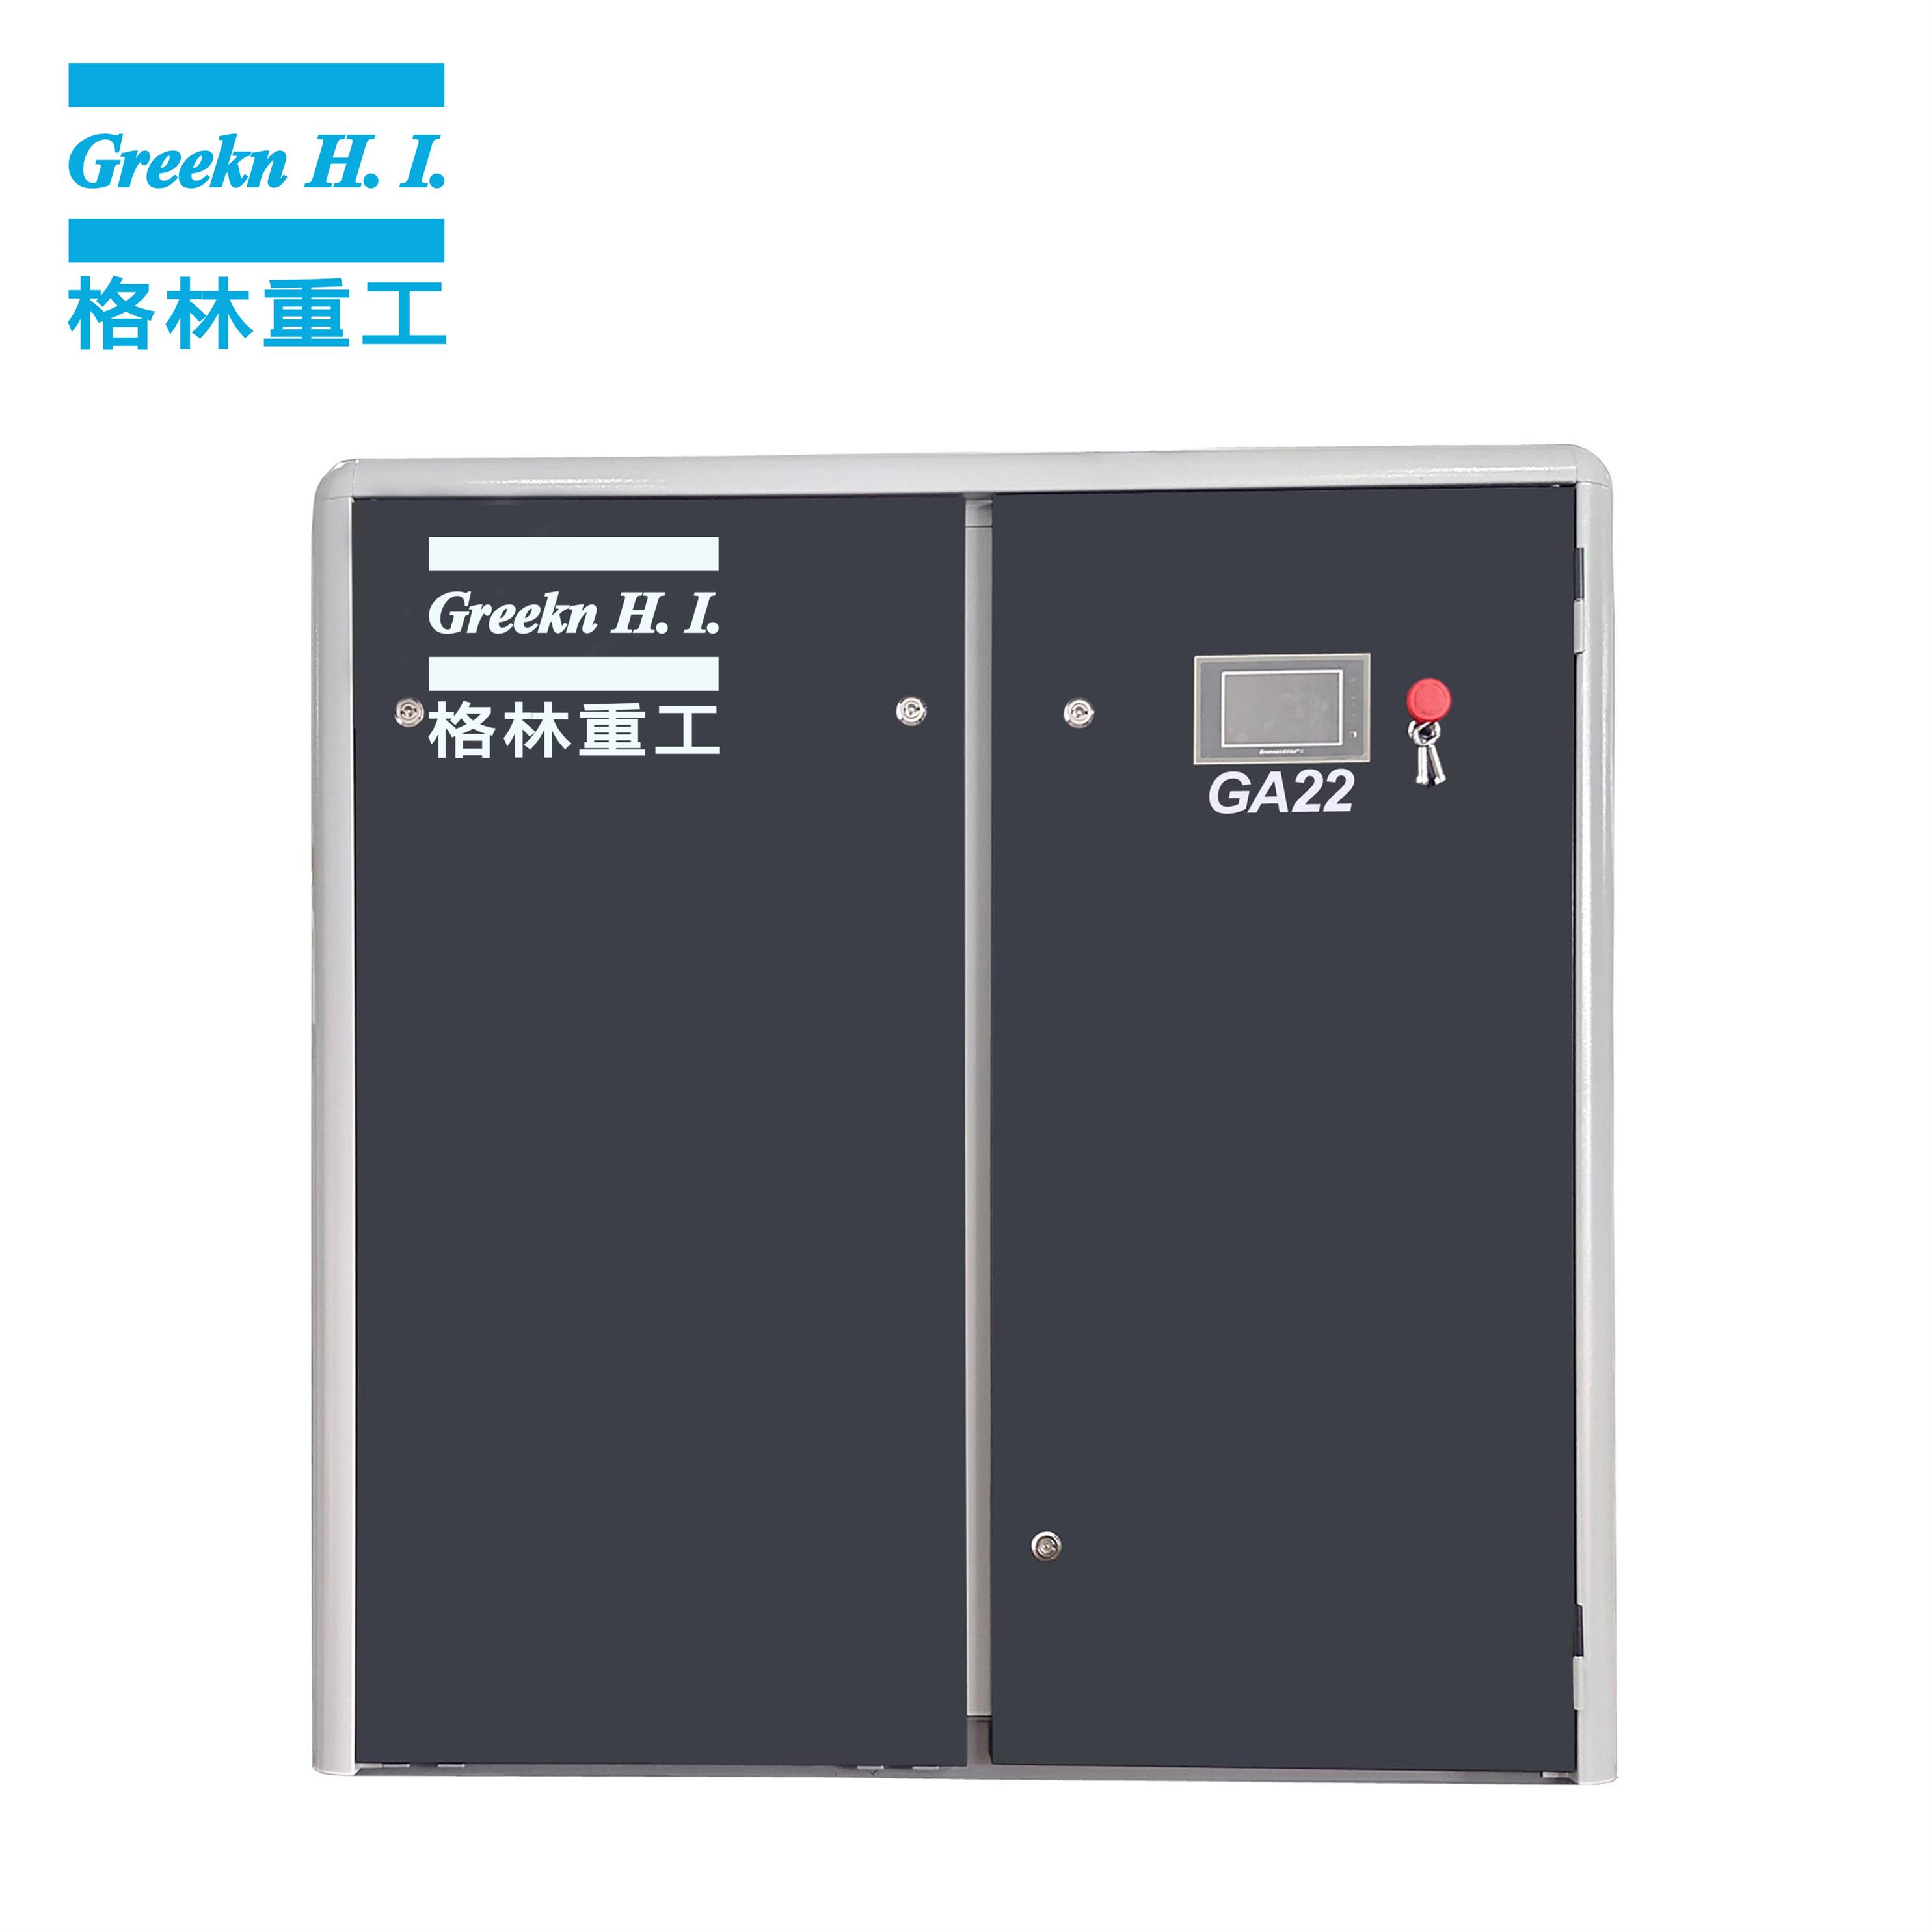 Greeknhi GA22 22kW 30HP Oil Lubricated Electrical Air Screw Compressor